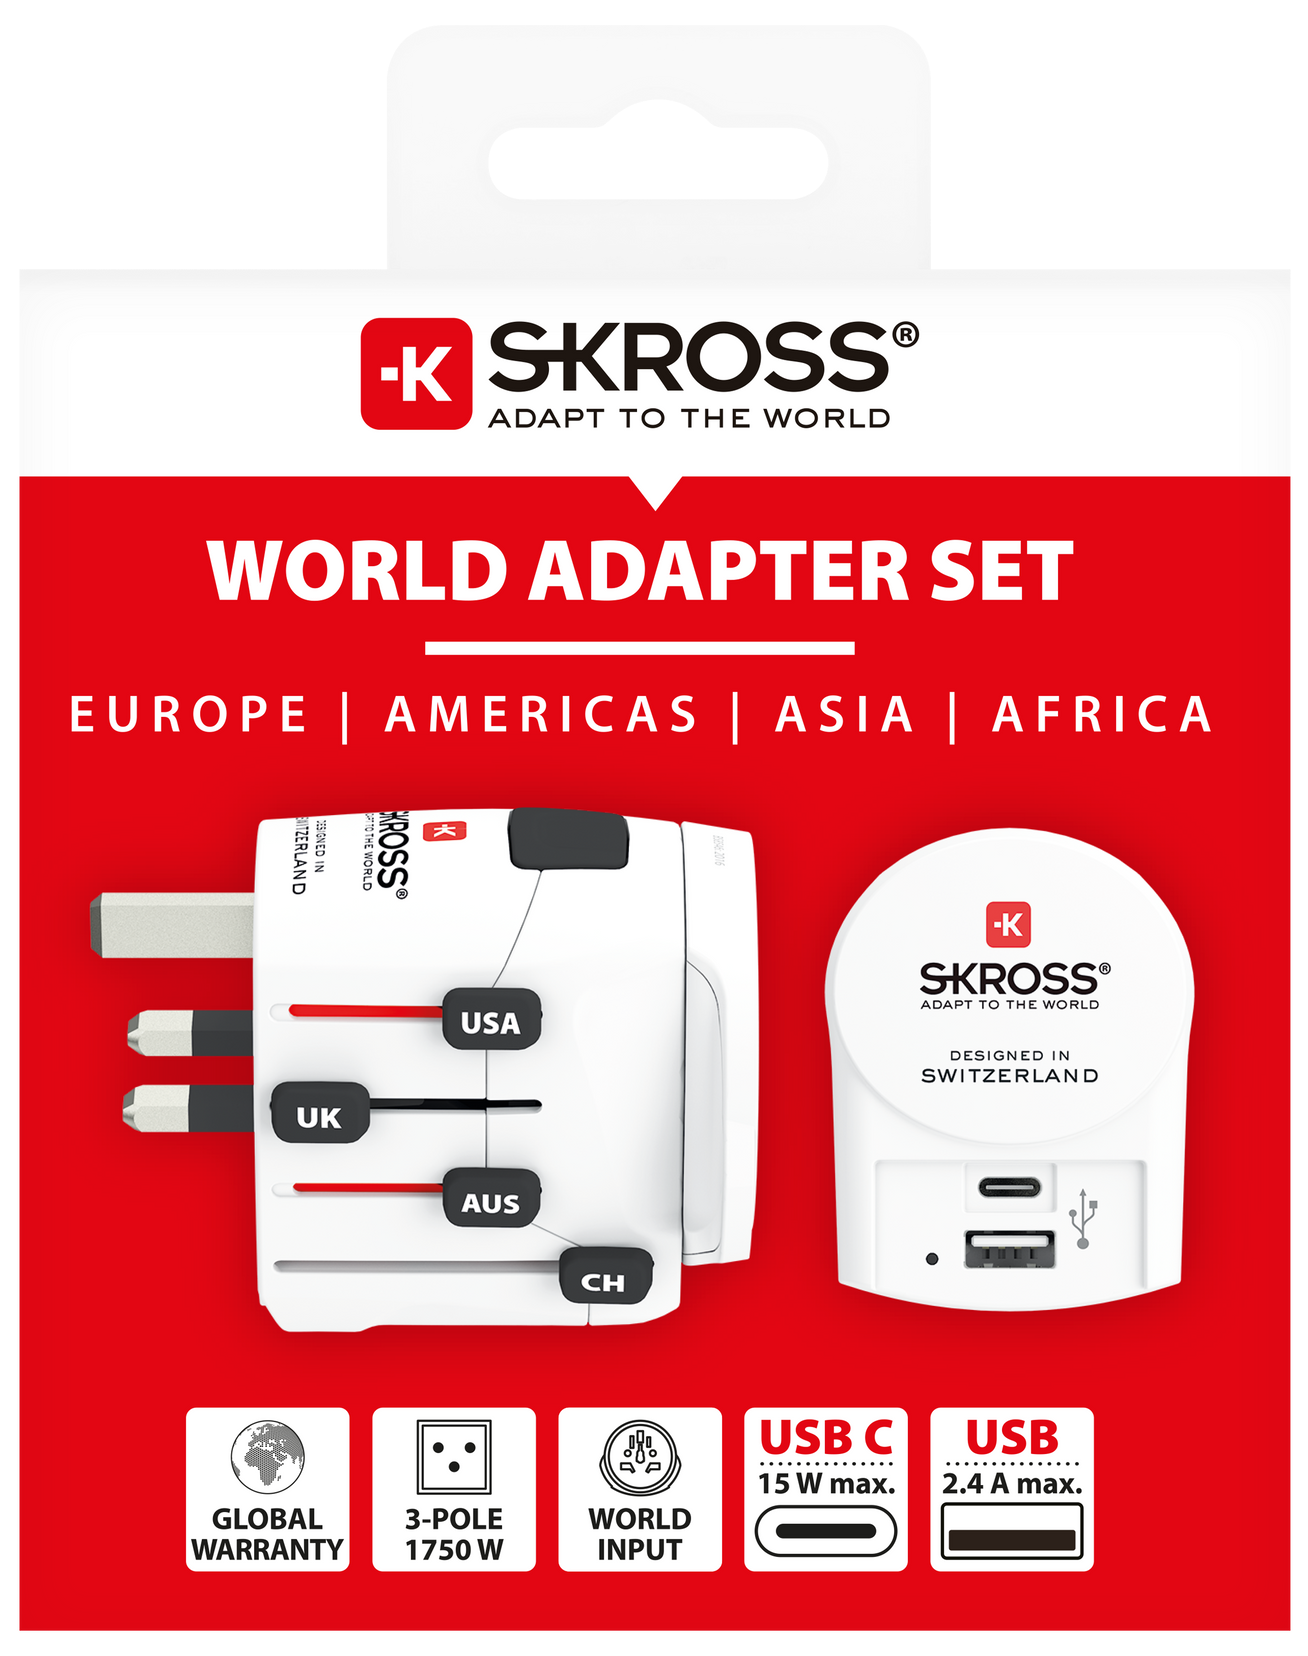 Skross 3-Pole PRO + USB AC Travel Adapter Packaging